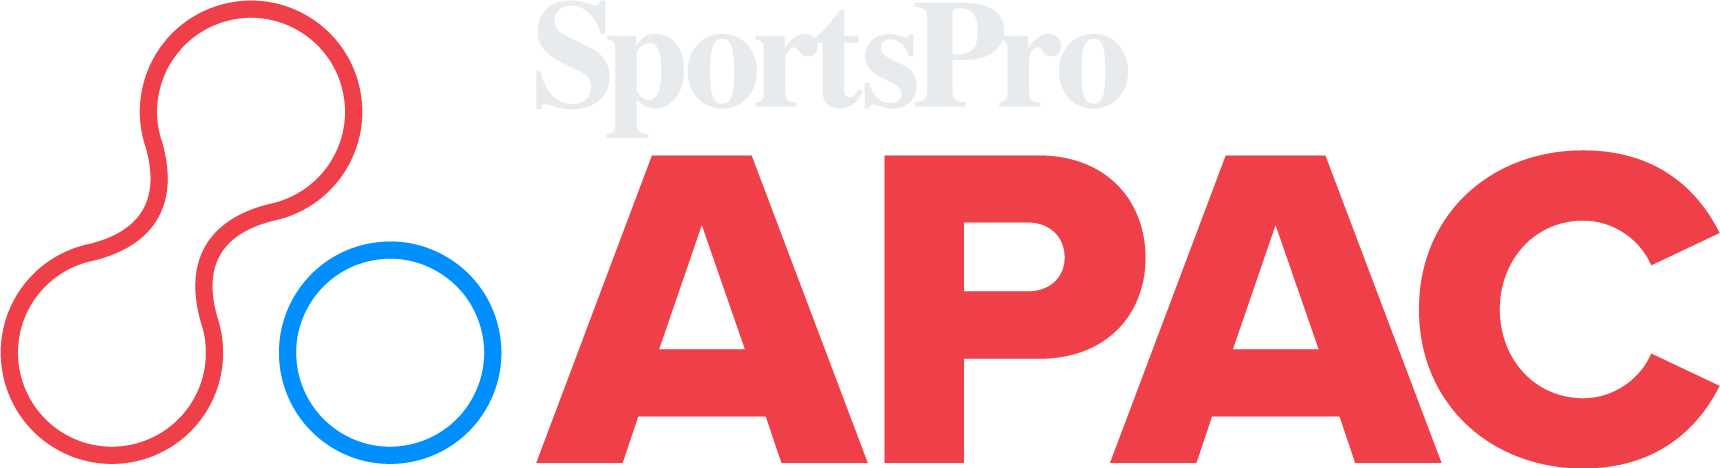 SportsPro APAC